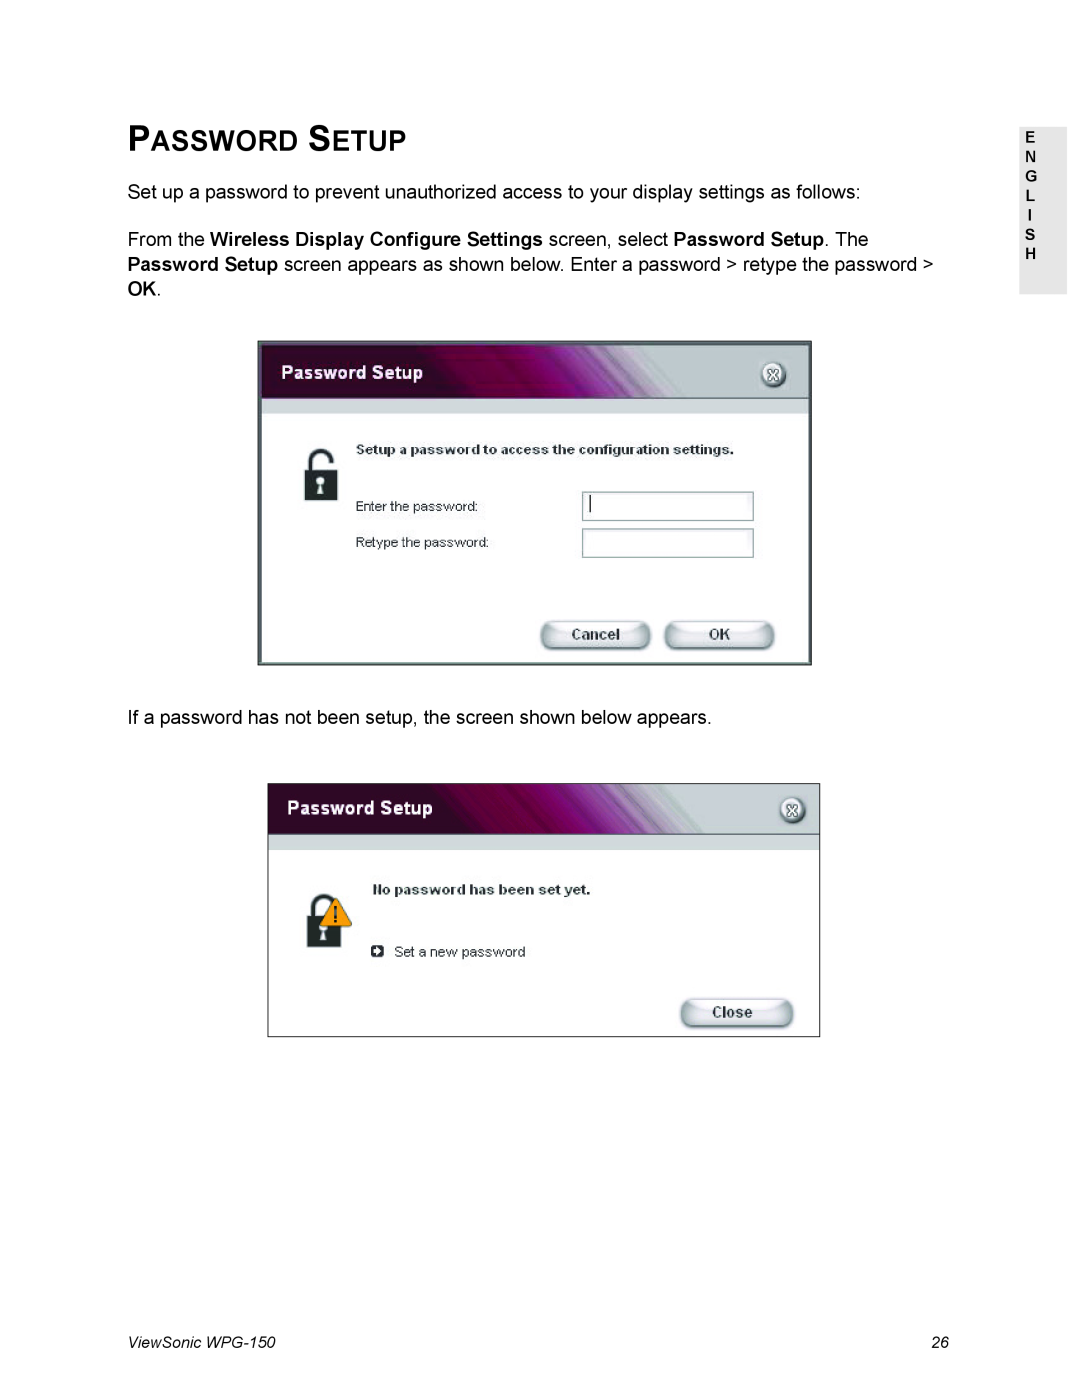 ViewSonic WPG-150 manual Password Setup 